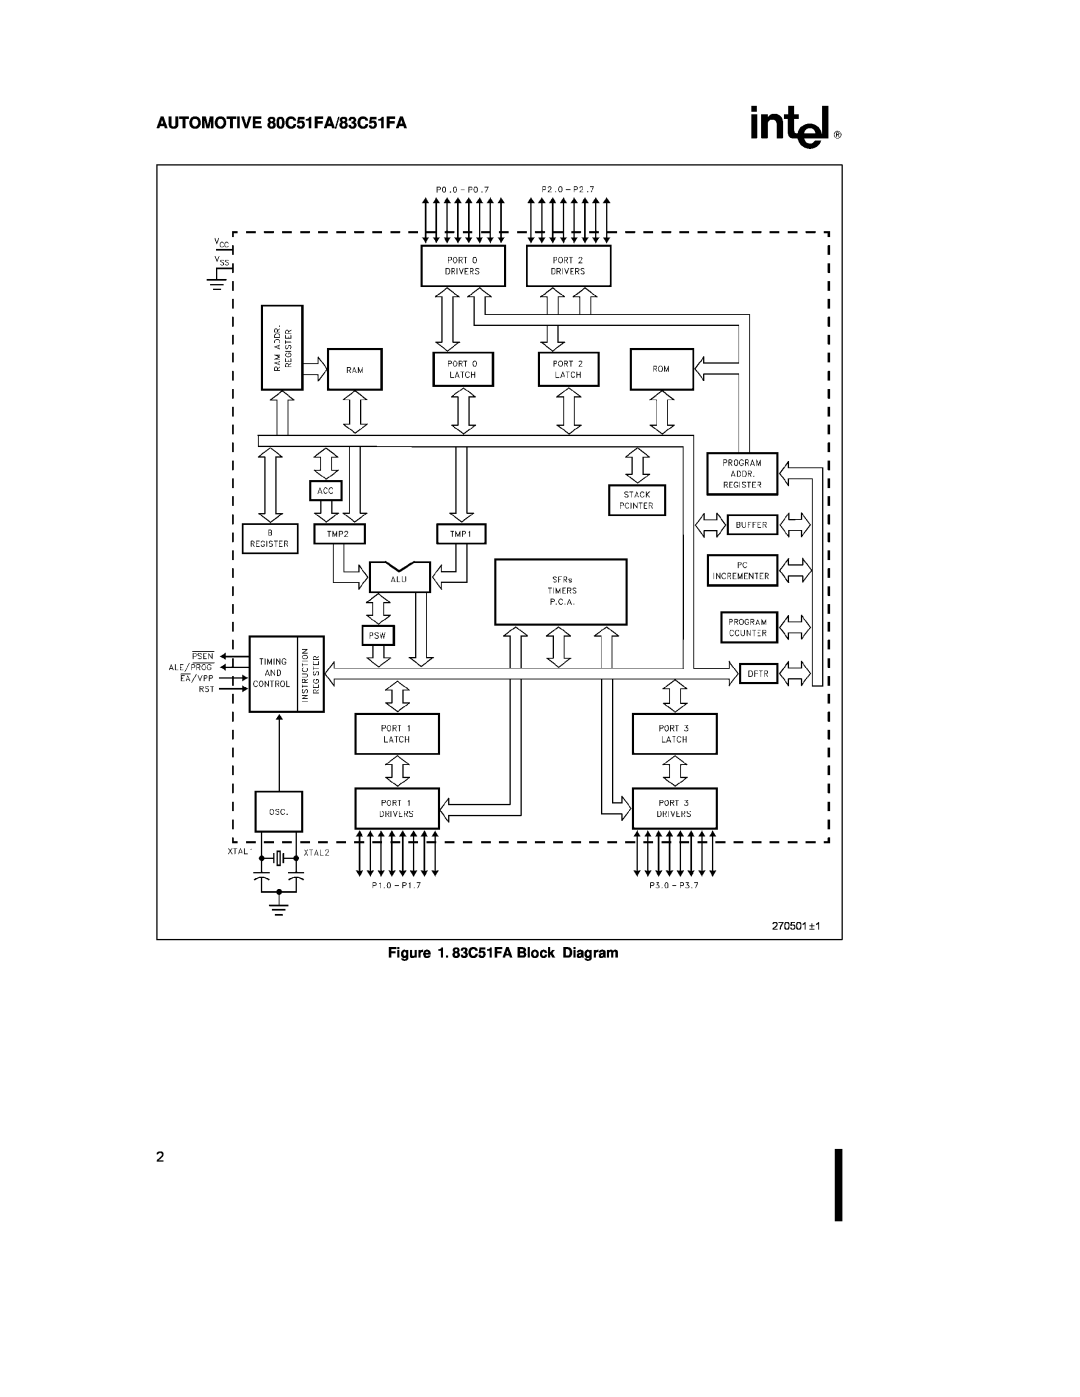 Intel specifications AUTOMOTIVE 80C51FA/83C51FA, 83C51FA Block Diagram 